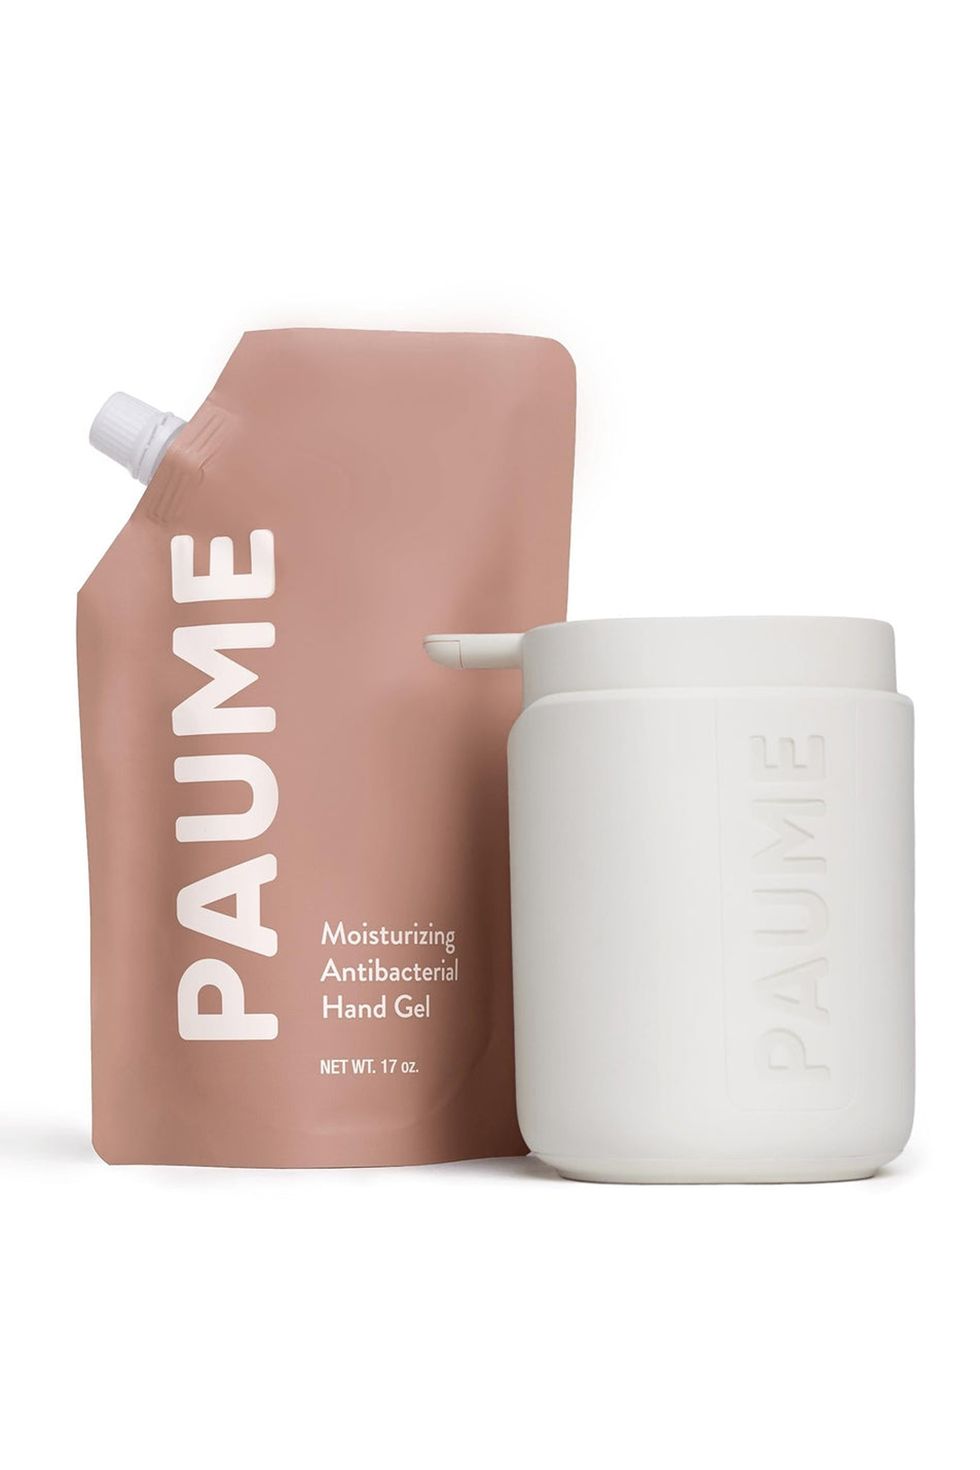 paume, at home sanitizer kit paume pump refill bag